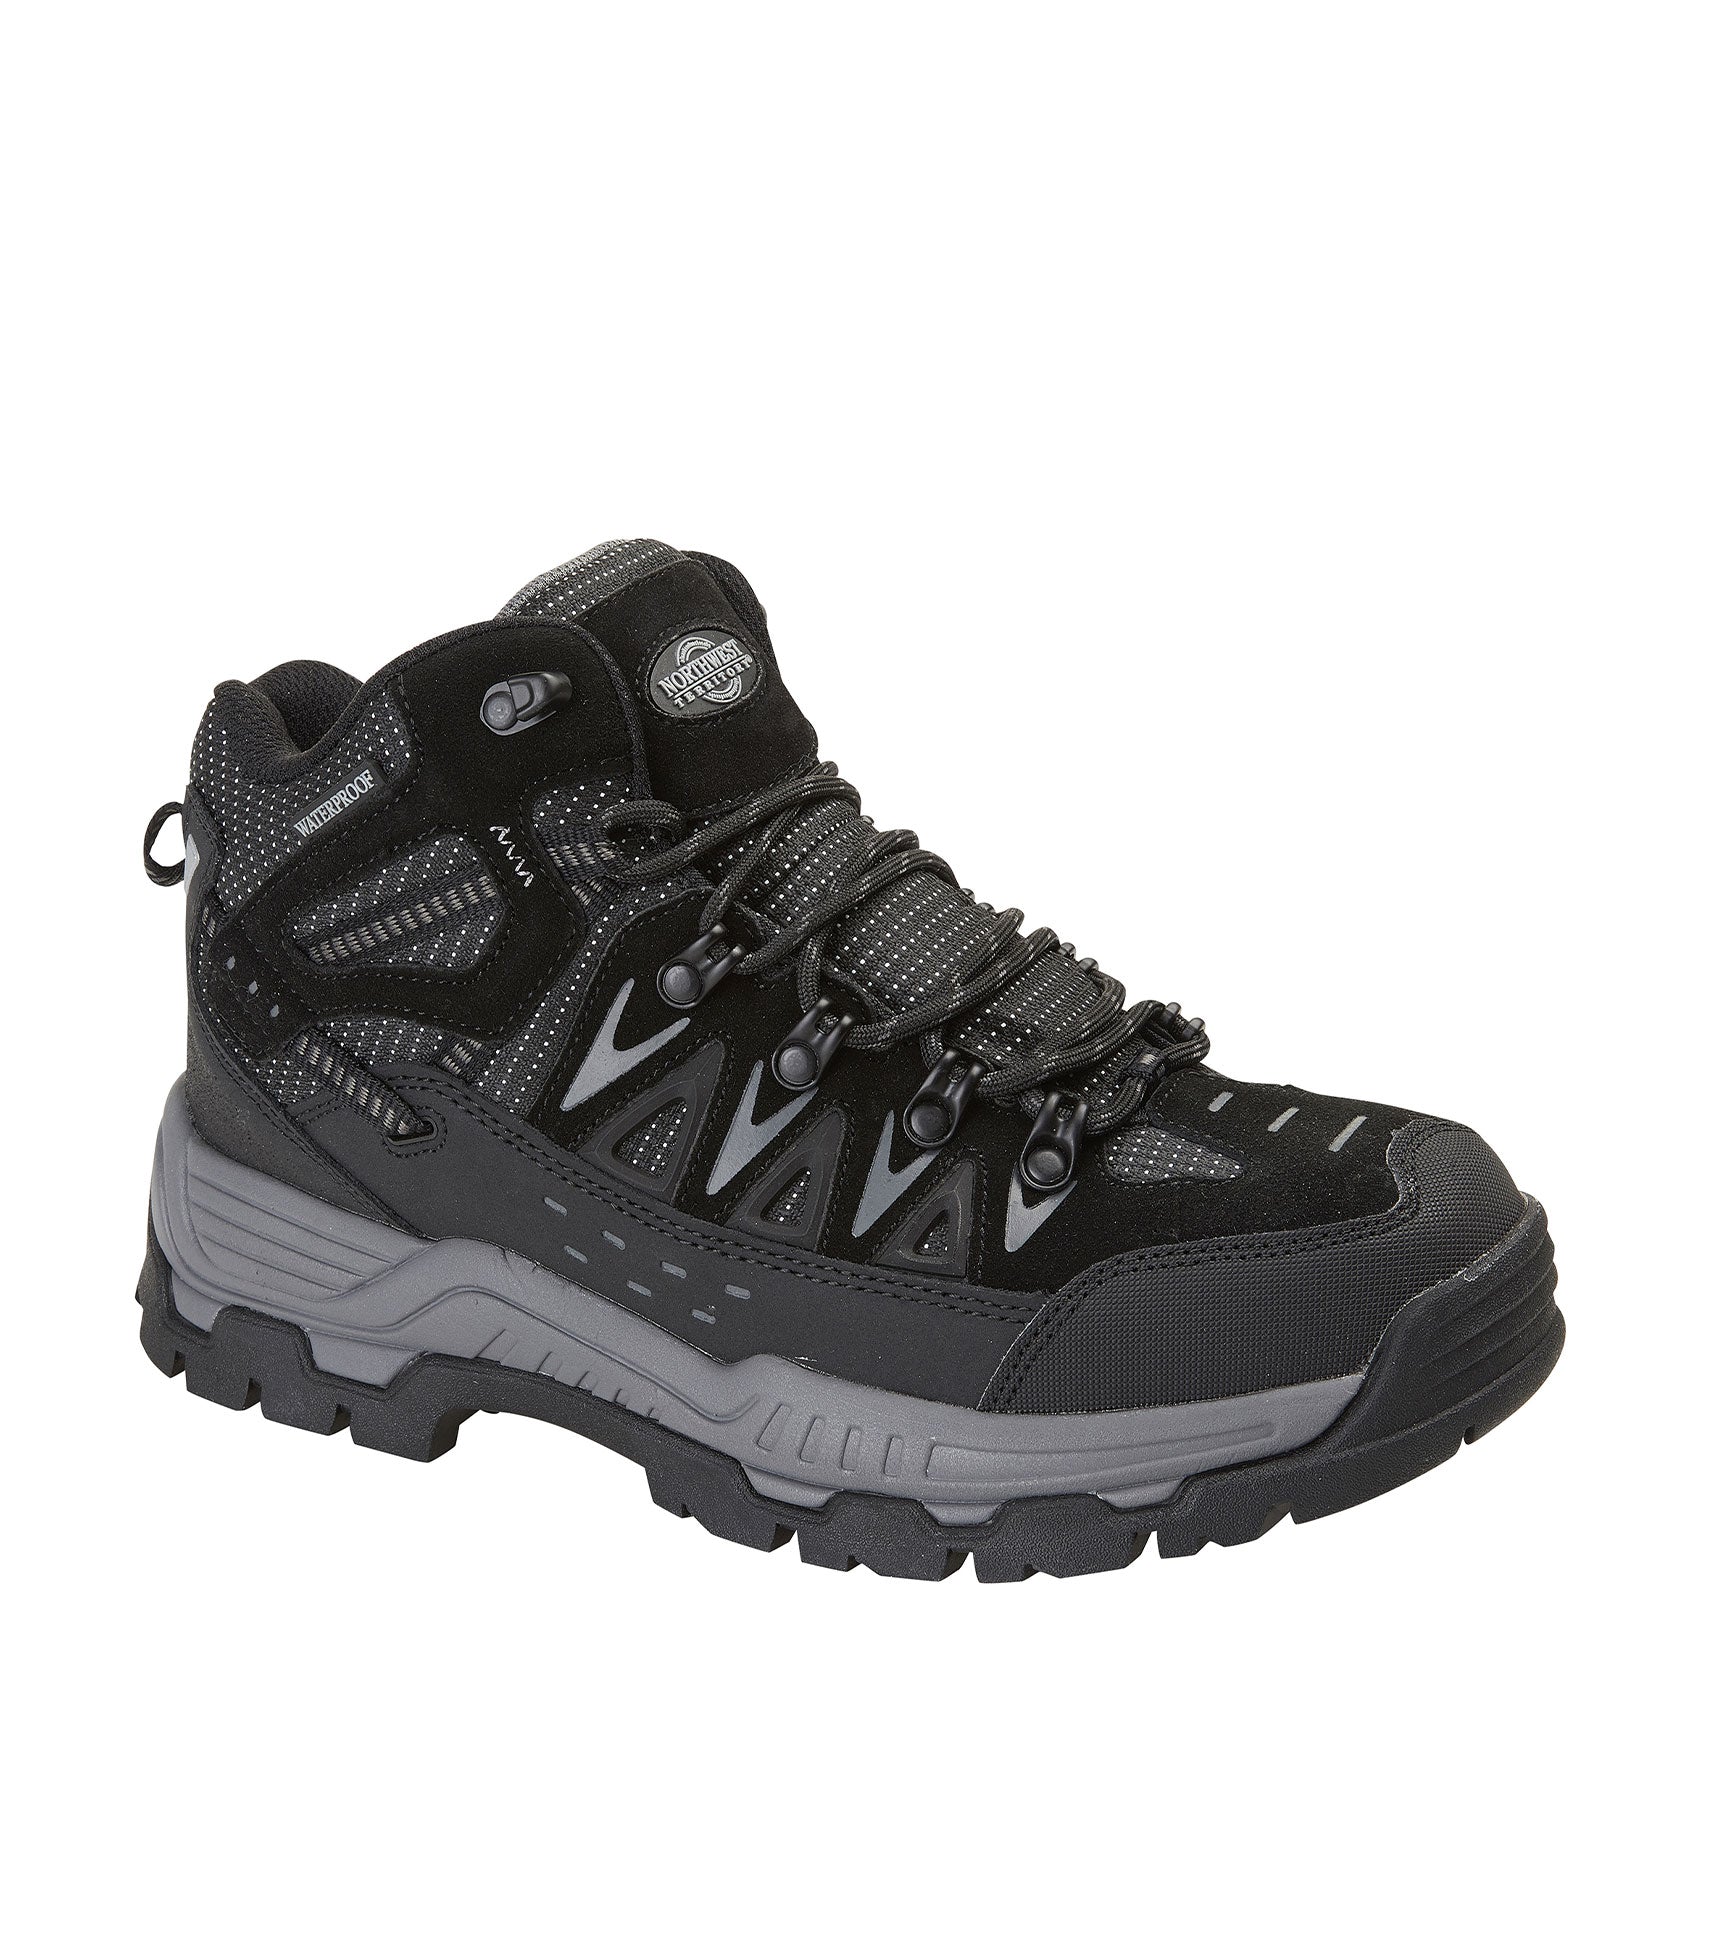 Men's Waterproof Walking Boots - Men's Waterproof Walking Boots